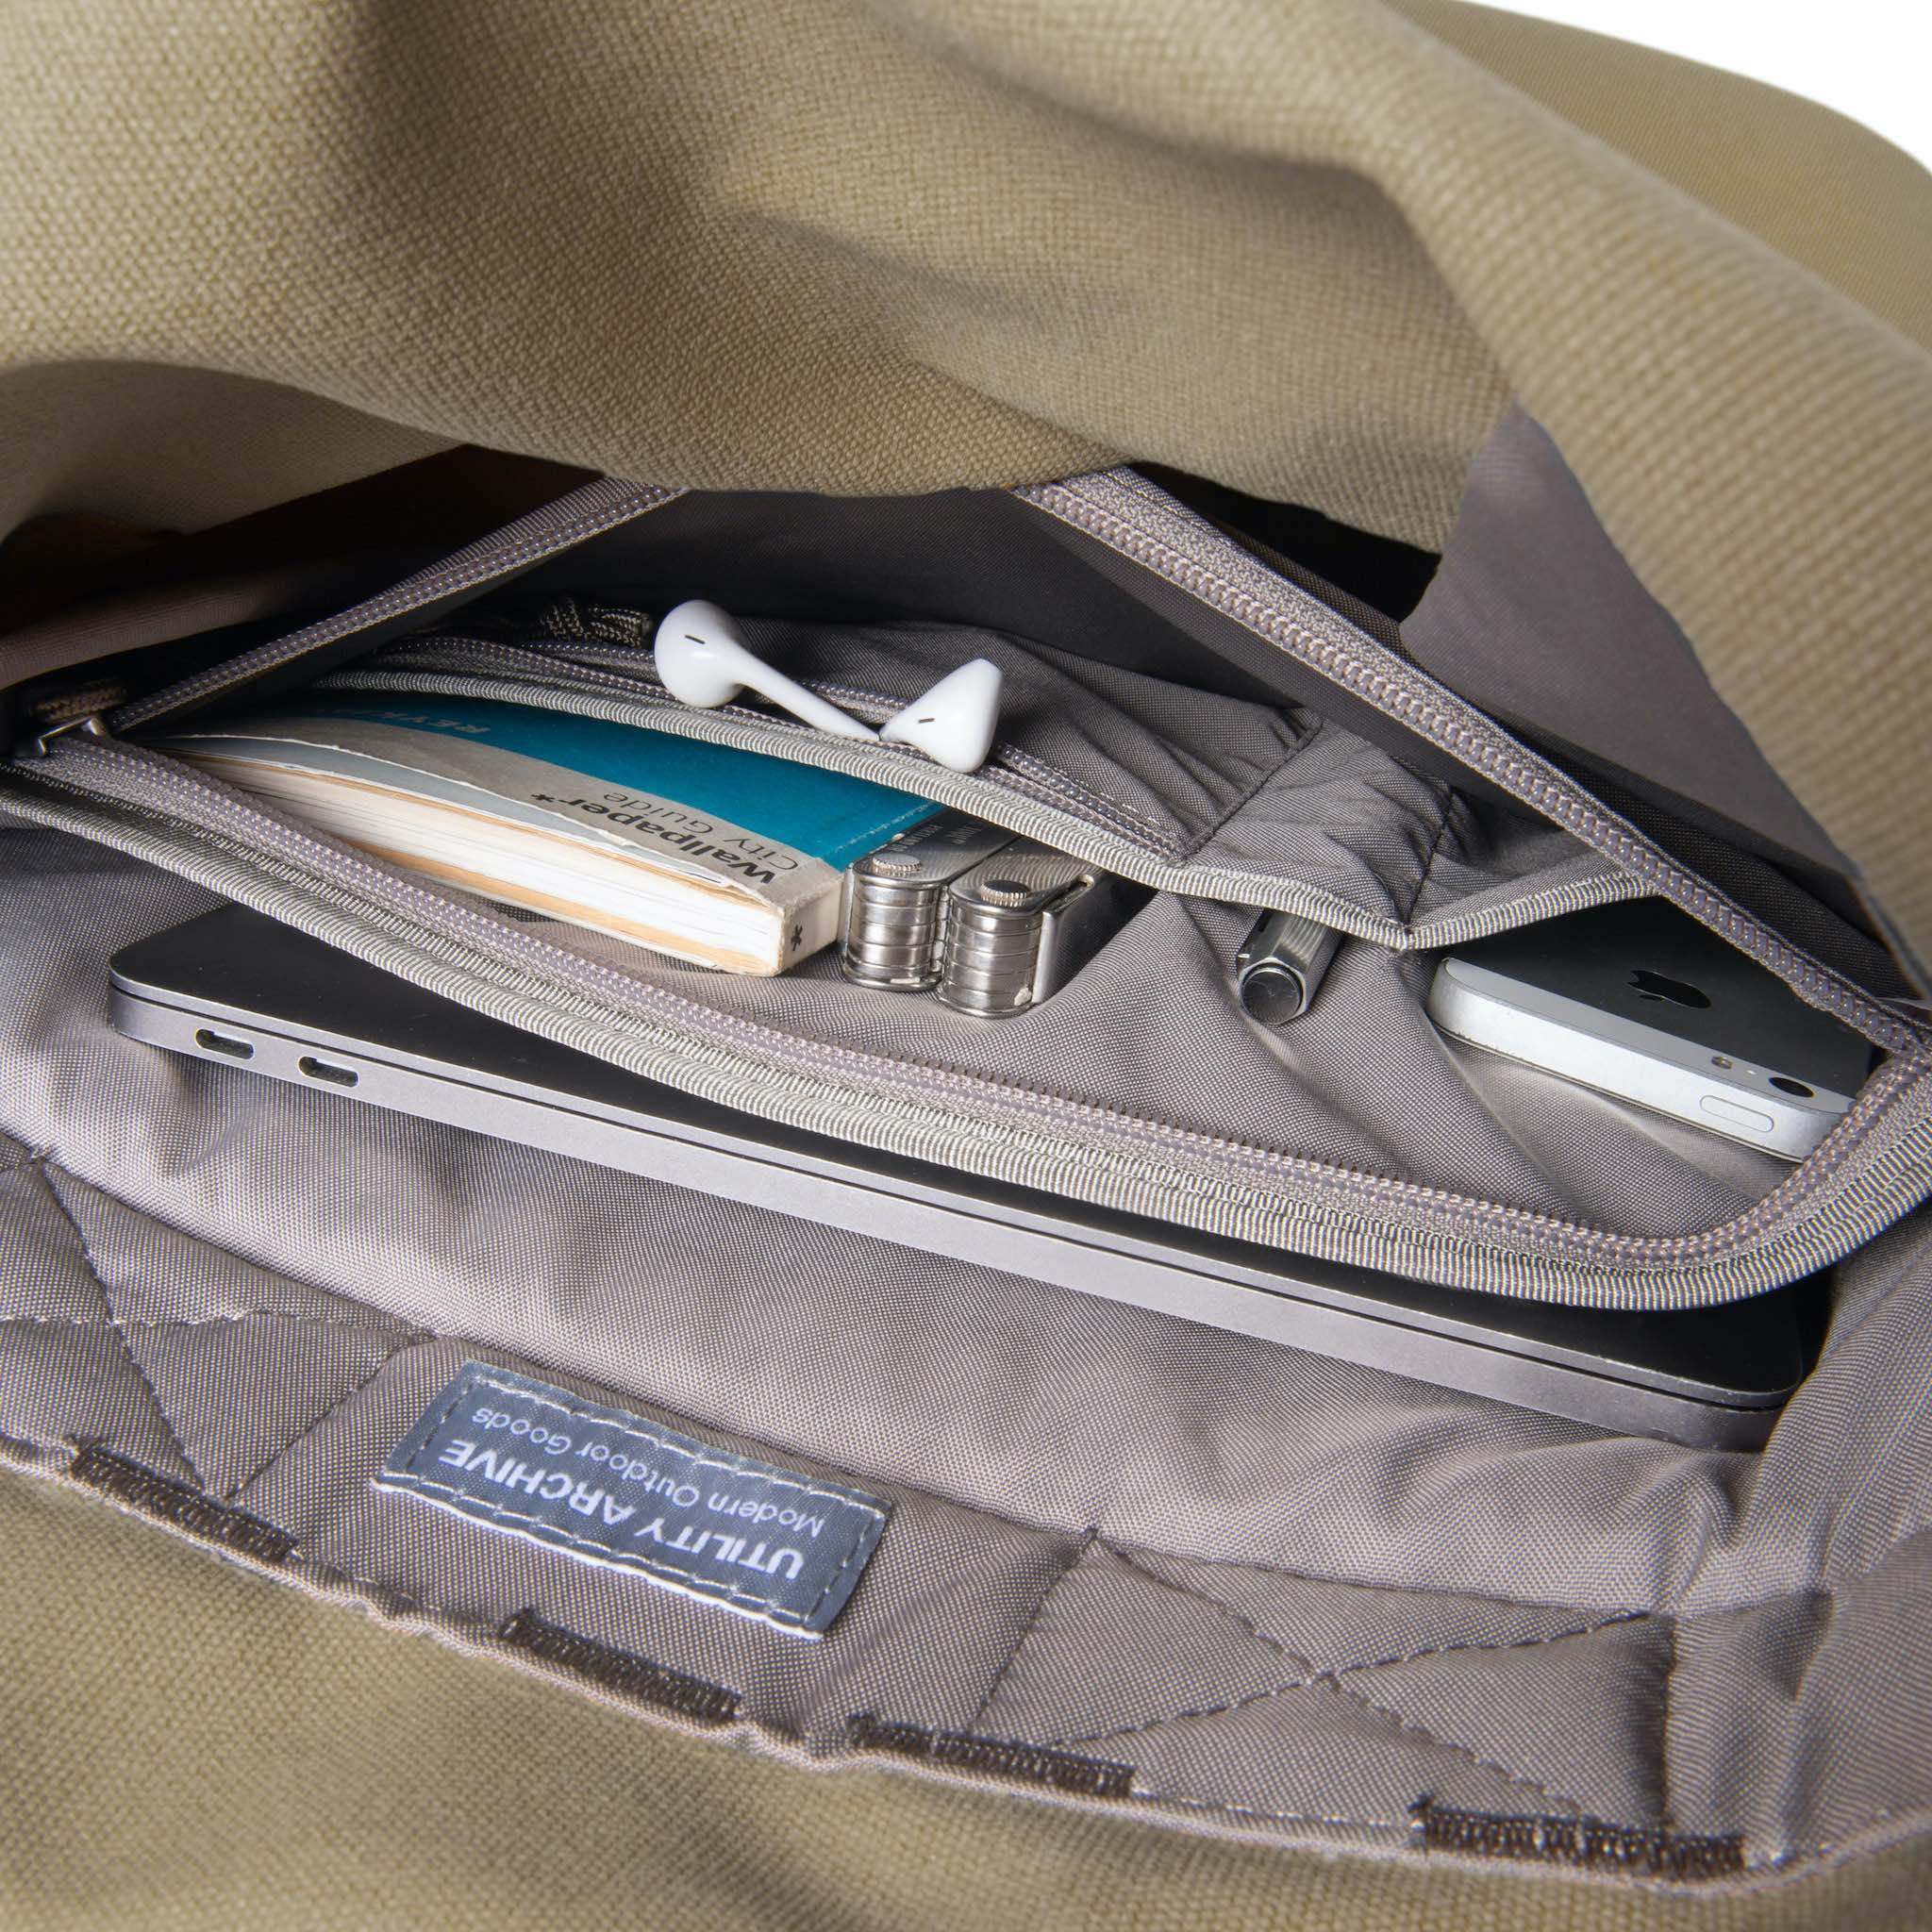 Khaki backpack organiser pocket with guidebook and earphones.